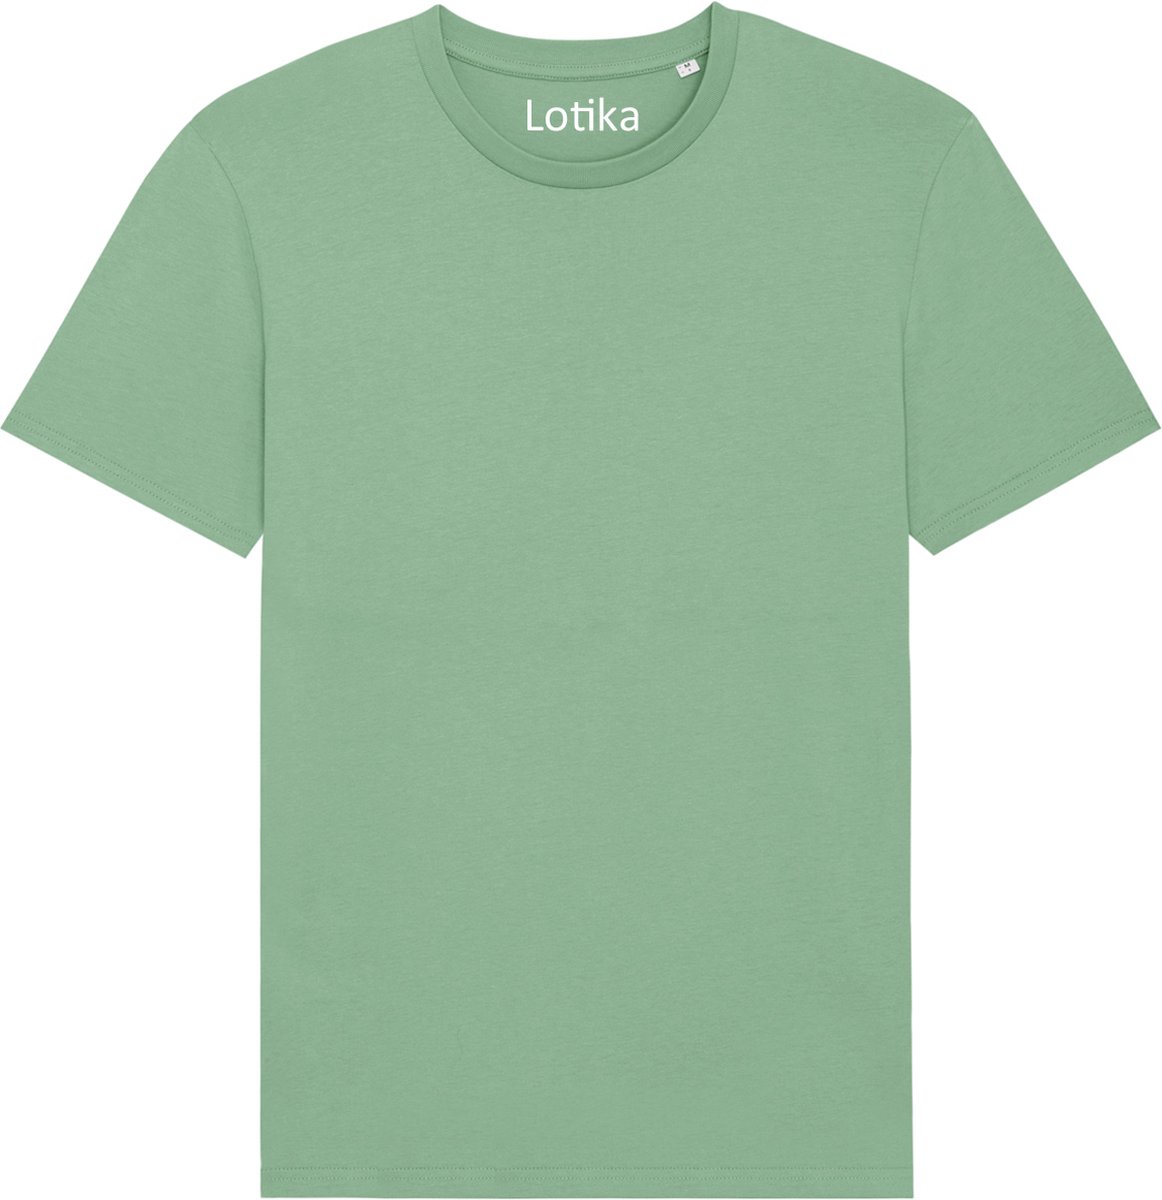 Lotika Daan T-shirt biologisch katoen dusty mint